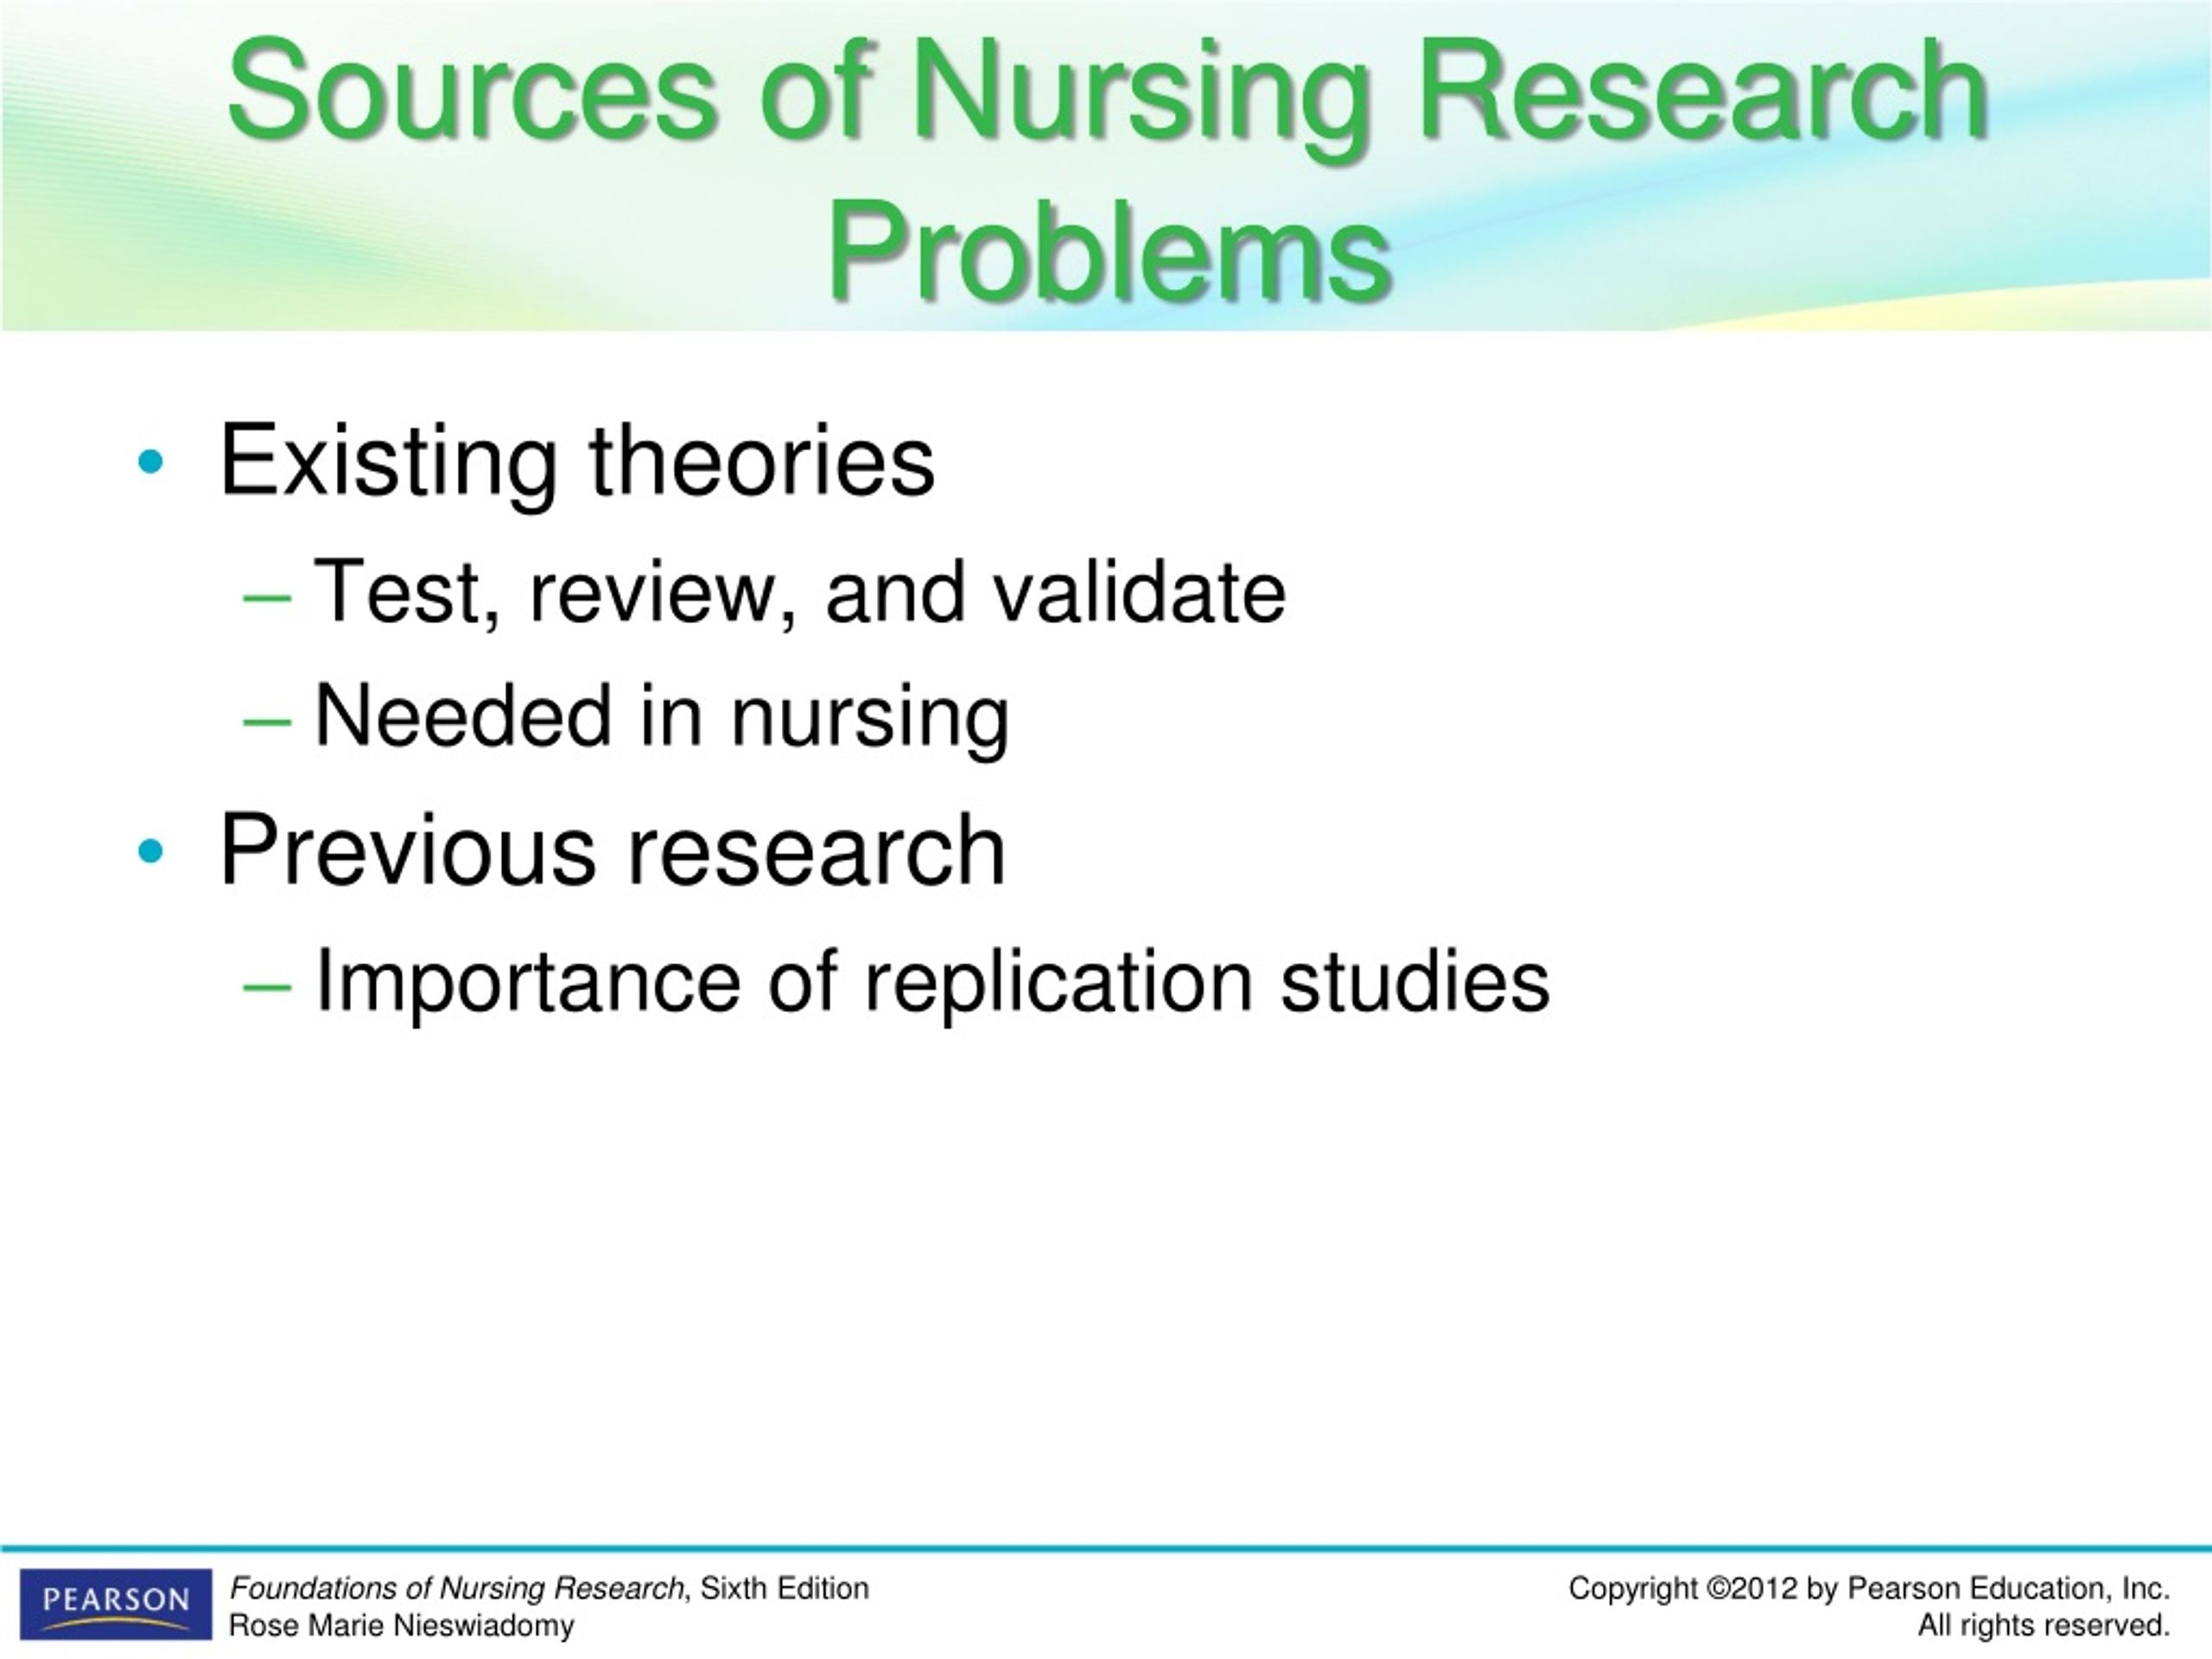 research problem in nursing